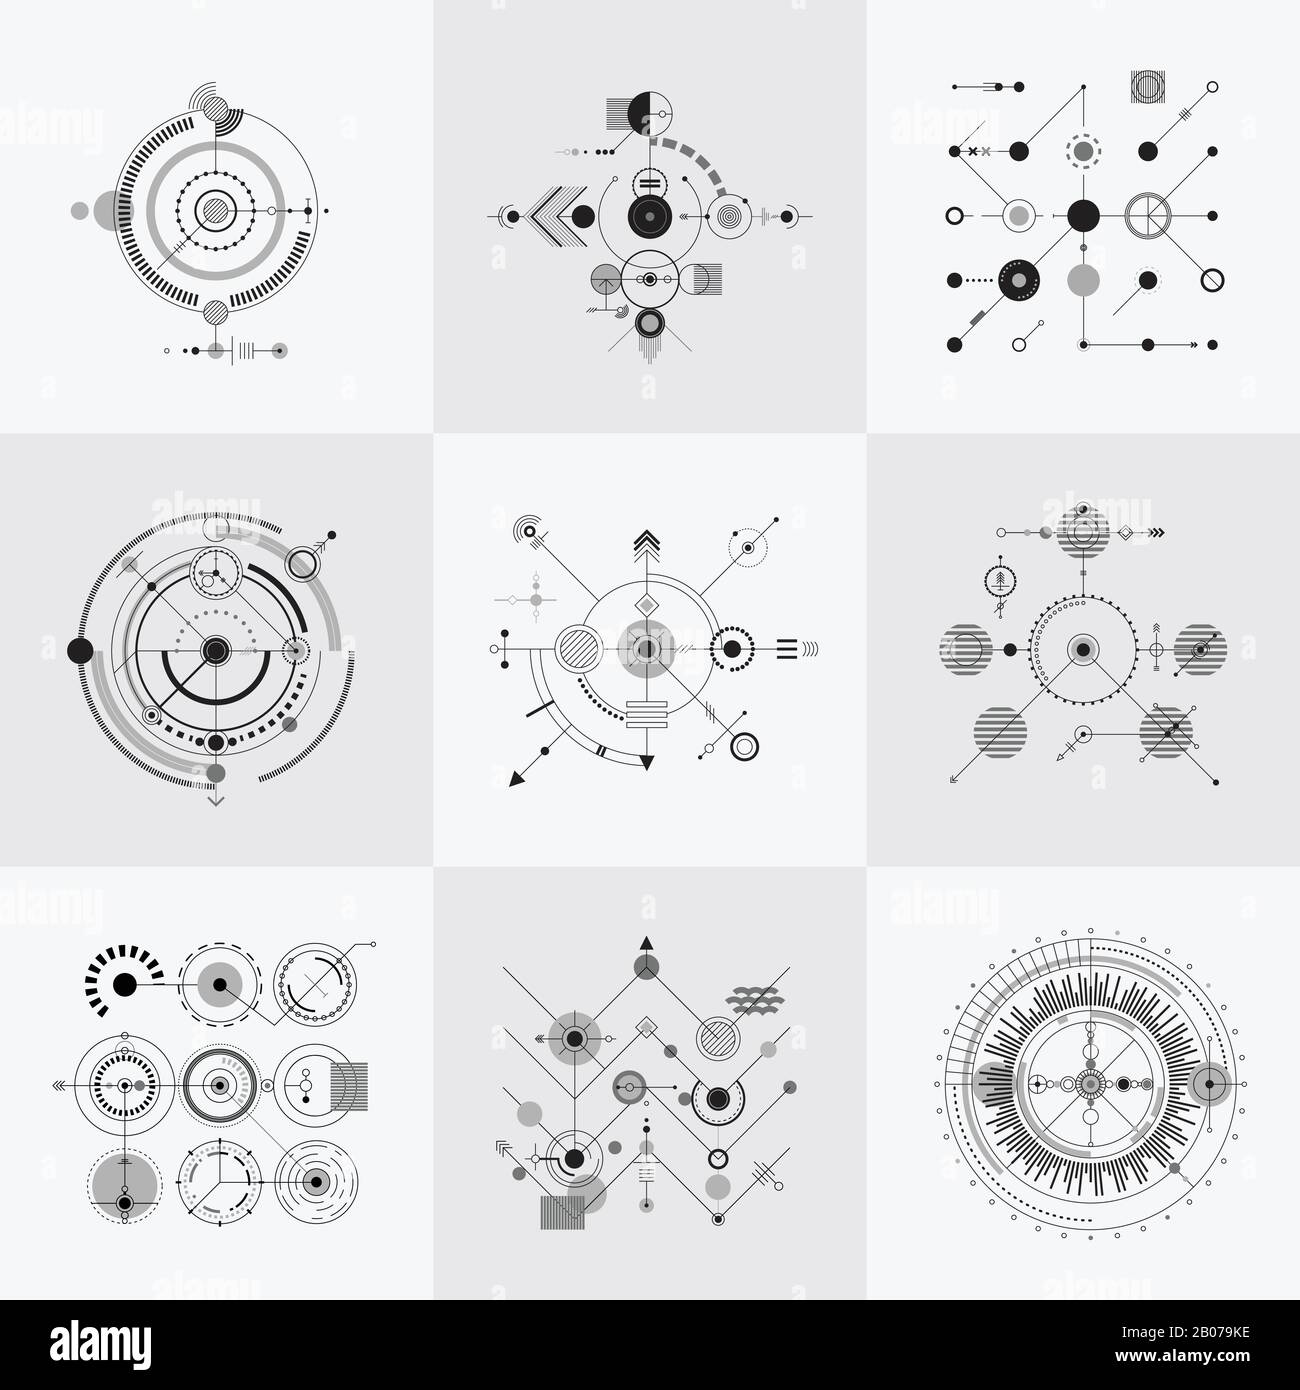 Scientific bauhaus technology circular grids vector set. Structure geometric pattern illustration Stock Vector